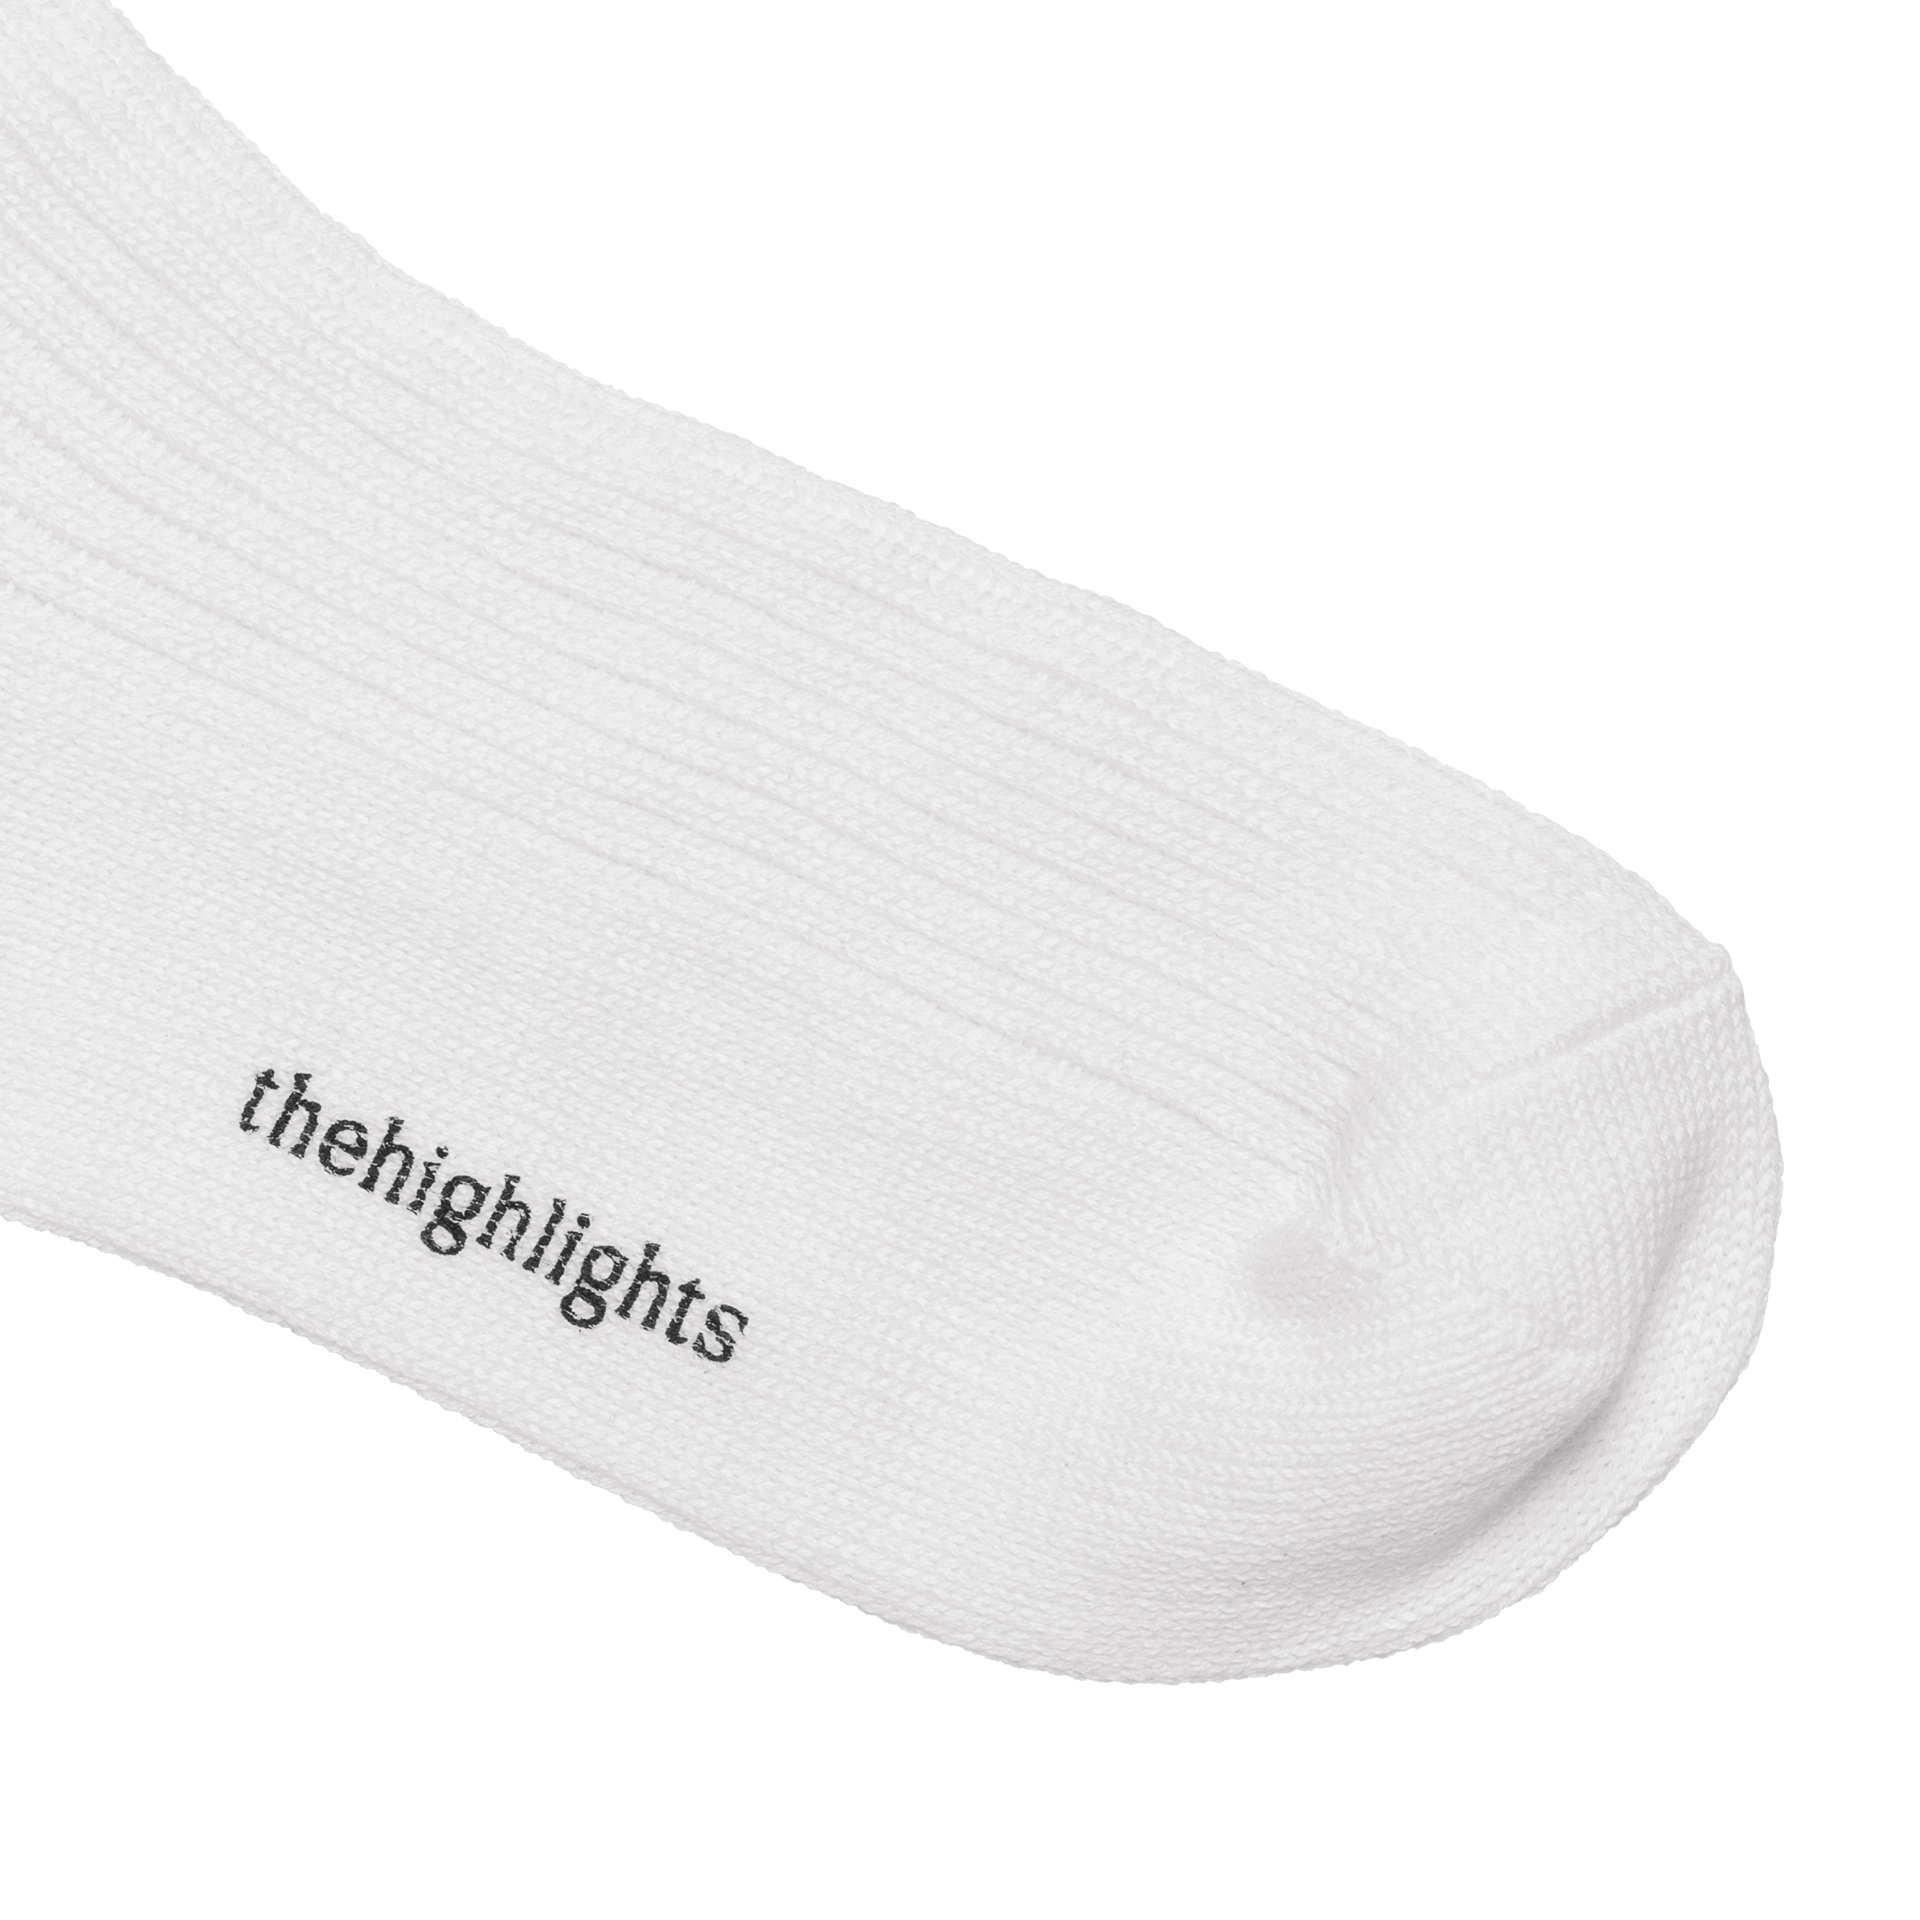 '2pair socks' heavy-duty cotton socks white